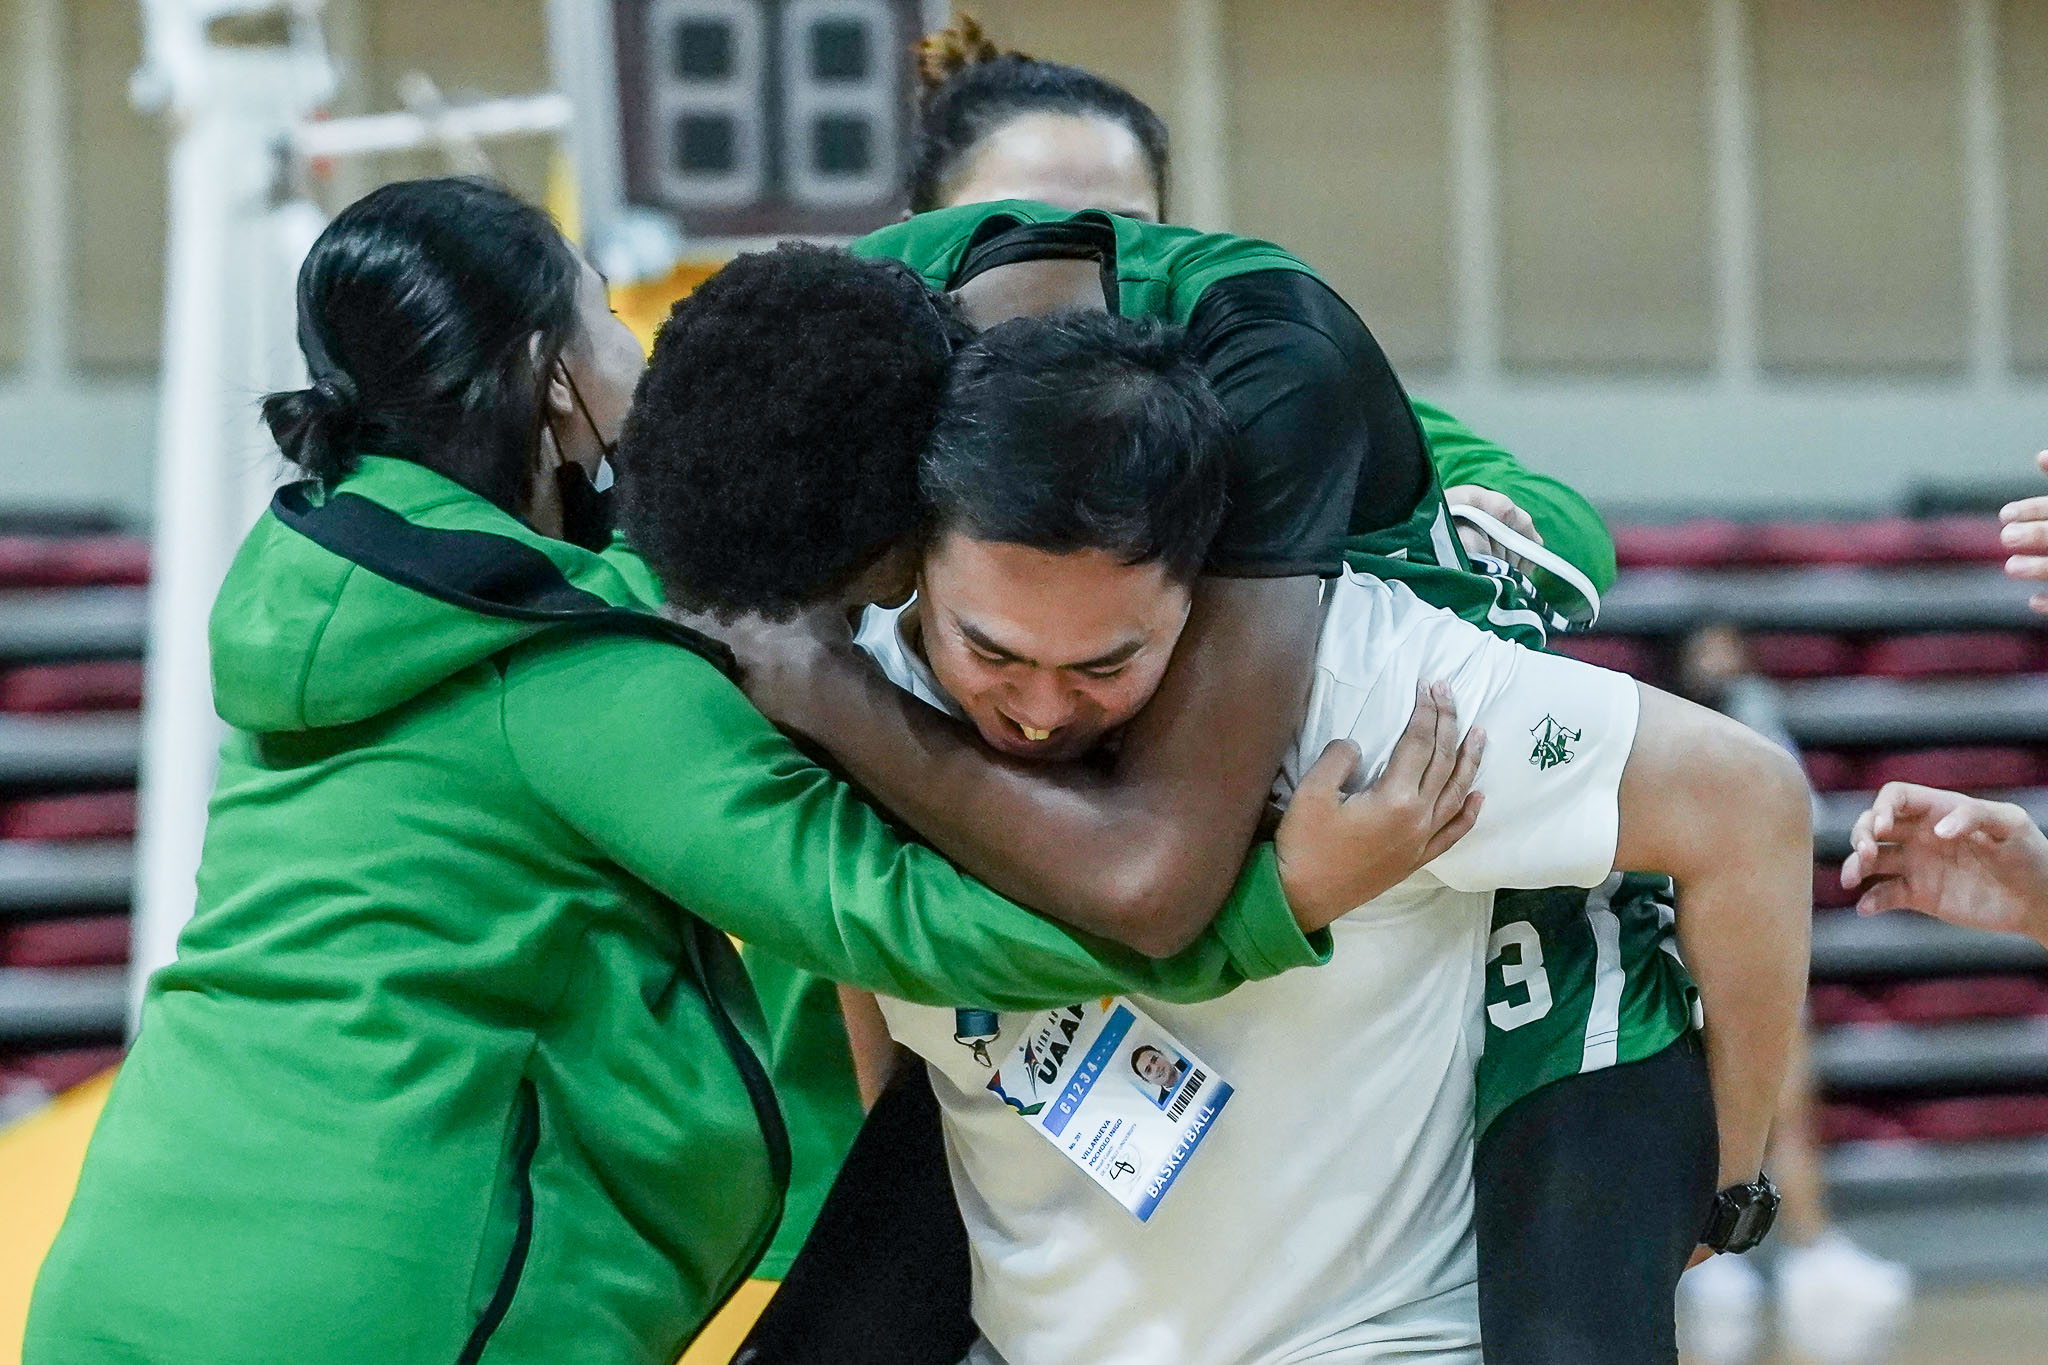 UAAP-S85-WBB-Round-2-NU-vs-DLSU-DLSU-Celebration-4 Despite streak ending, NU should not lose sight of goal, says Aris Dimaunahan Basketball News NU UAAP  - philippine sports news